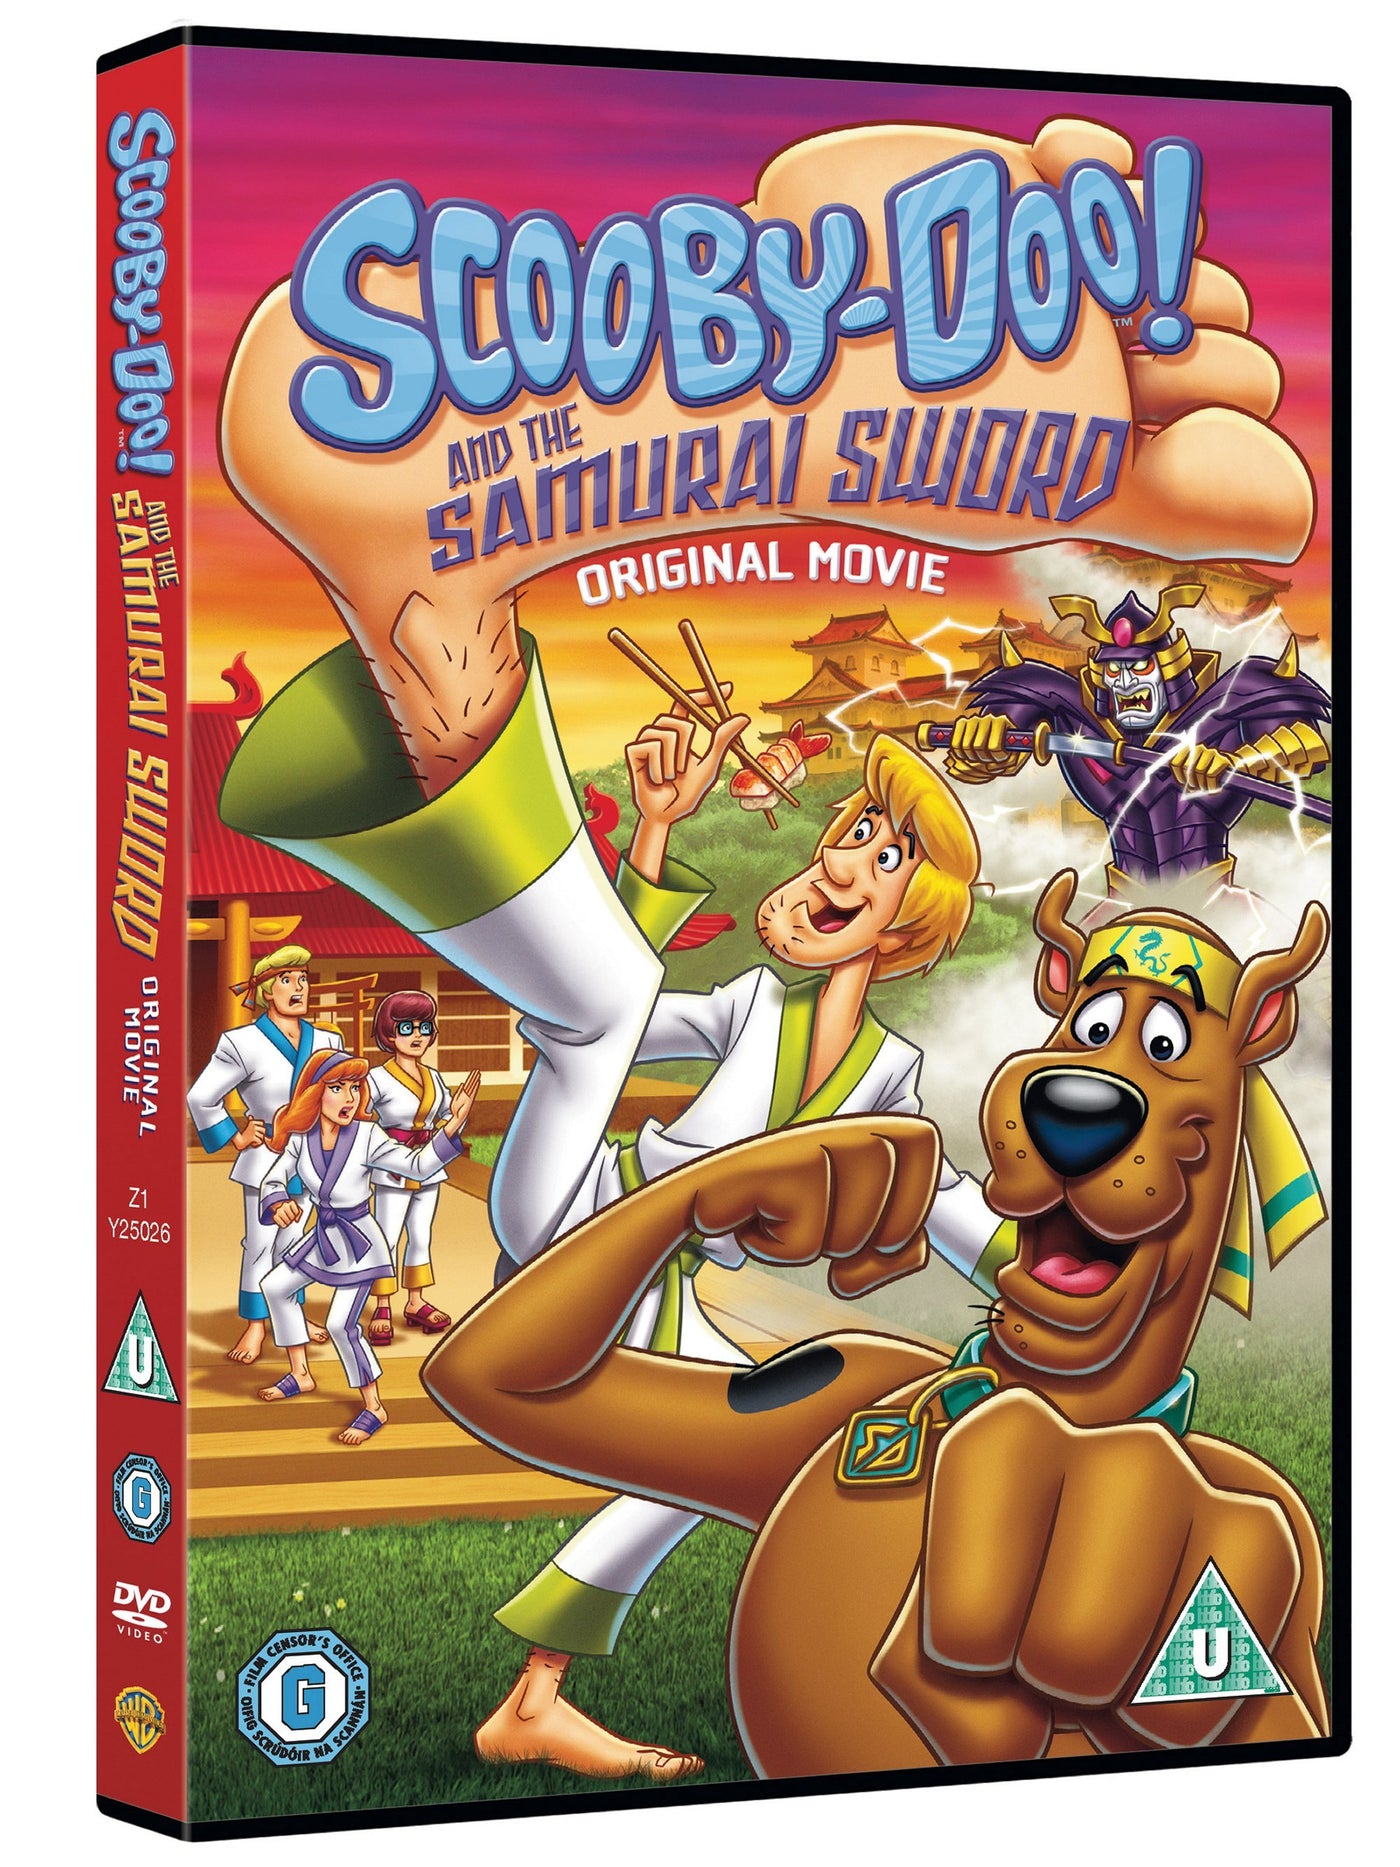 Scooby-Doo: Scooby-Doo And The Samurai Sword [2009] (DVD)